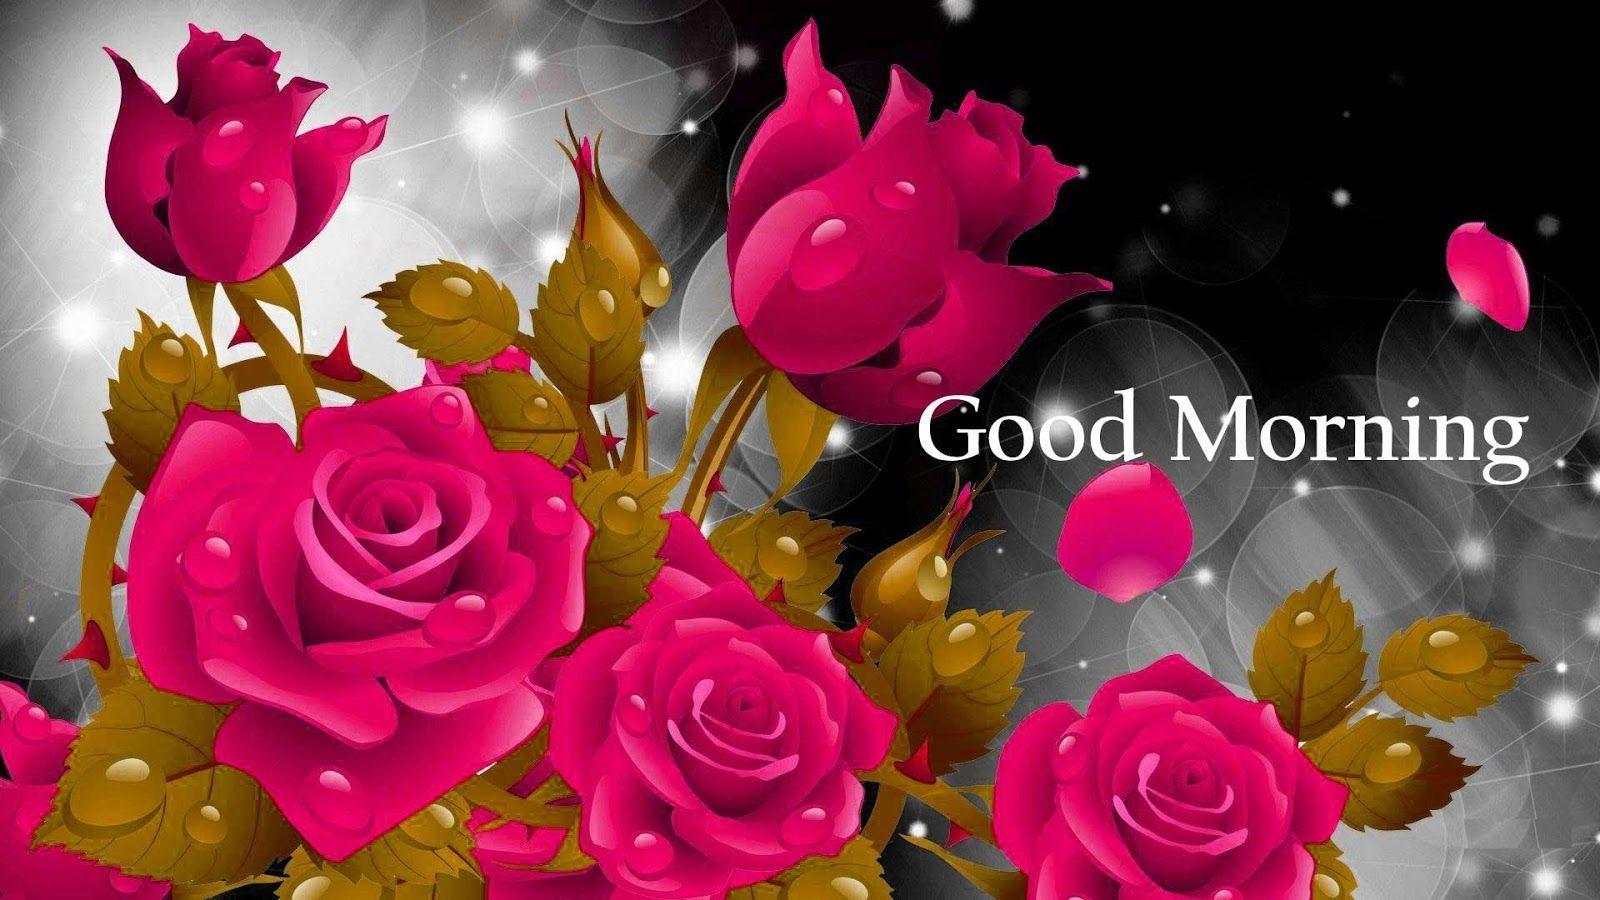 Good Morning Image with Rose. Rose flower wallpaper, Wallpaper nature flowers, Red flower wallpaper